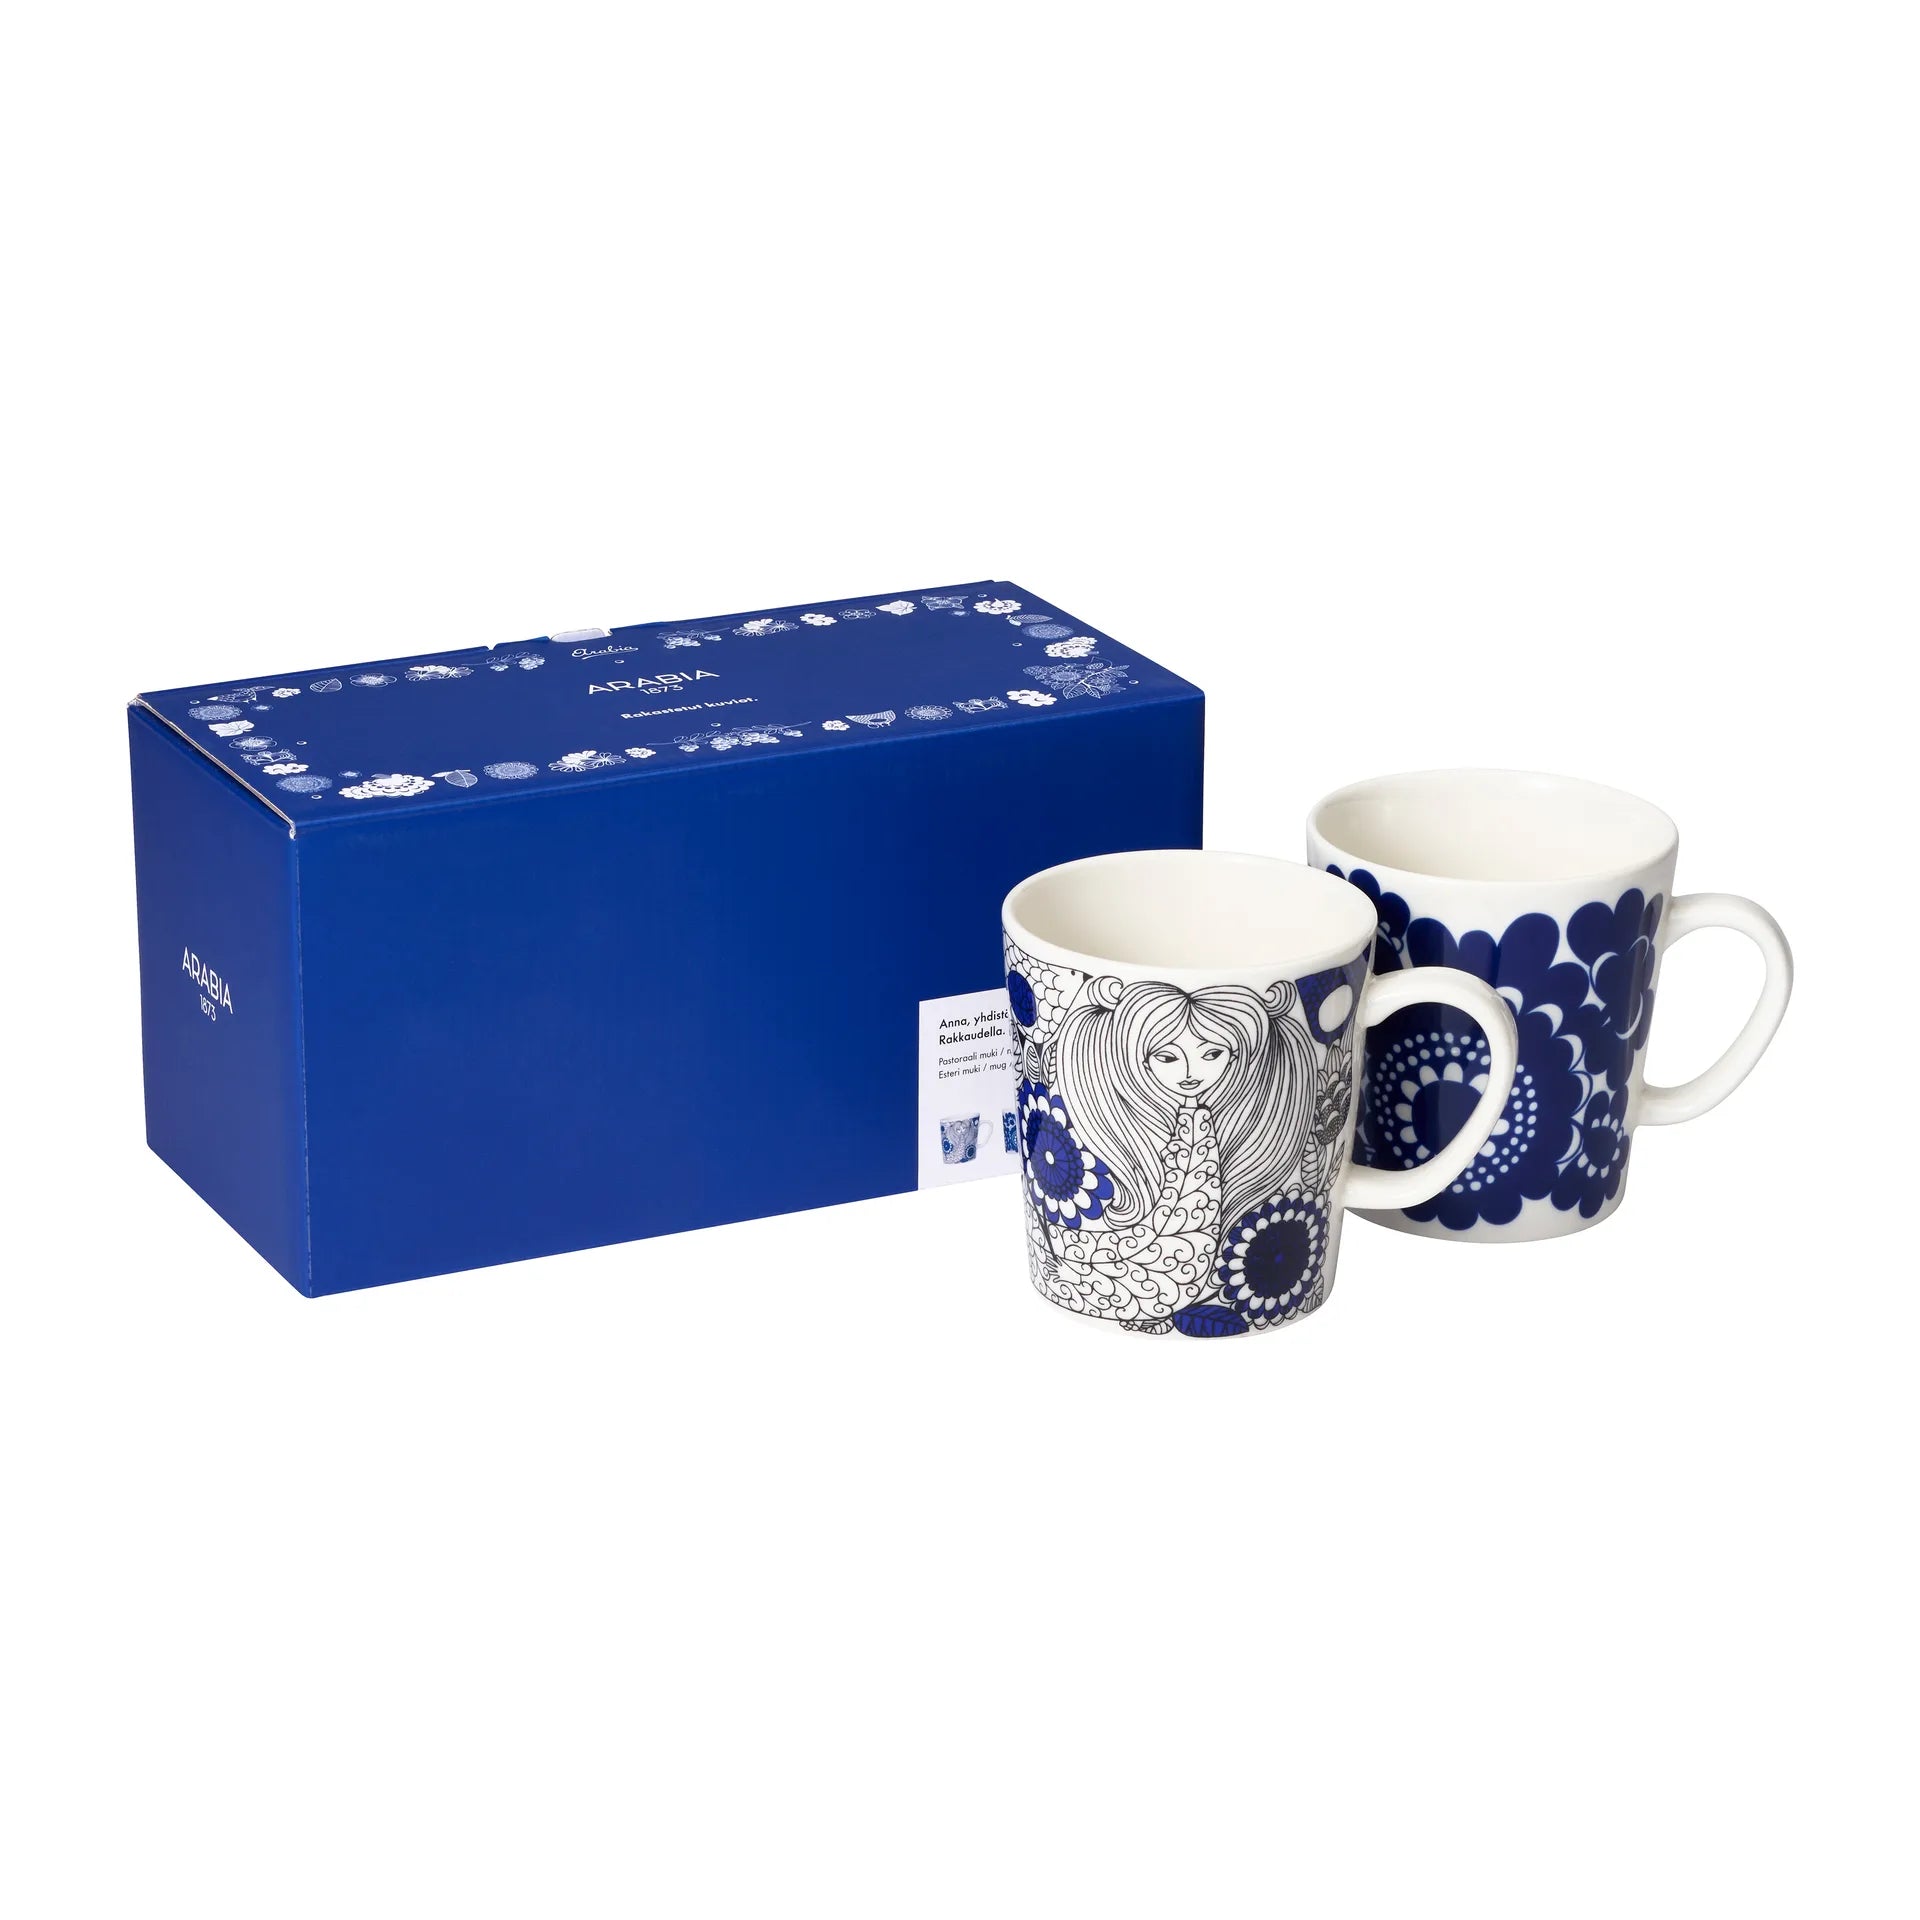 Pastoraali & Esteri Arabia mix set mug 2 pieces - Blue